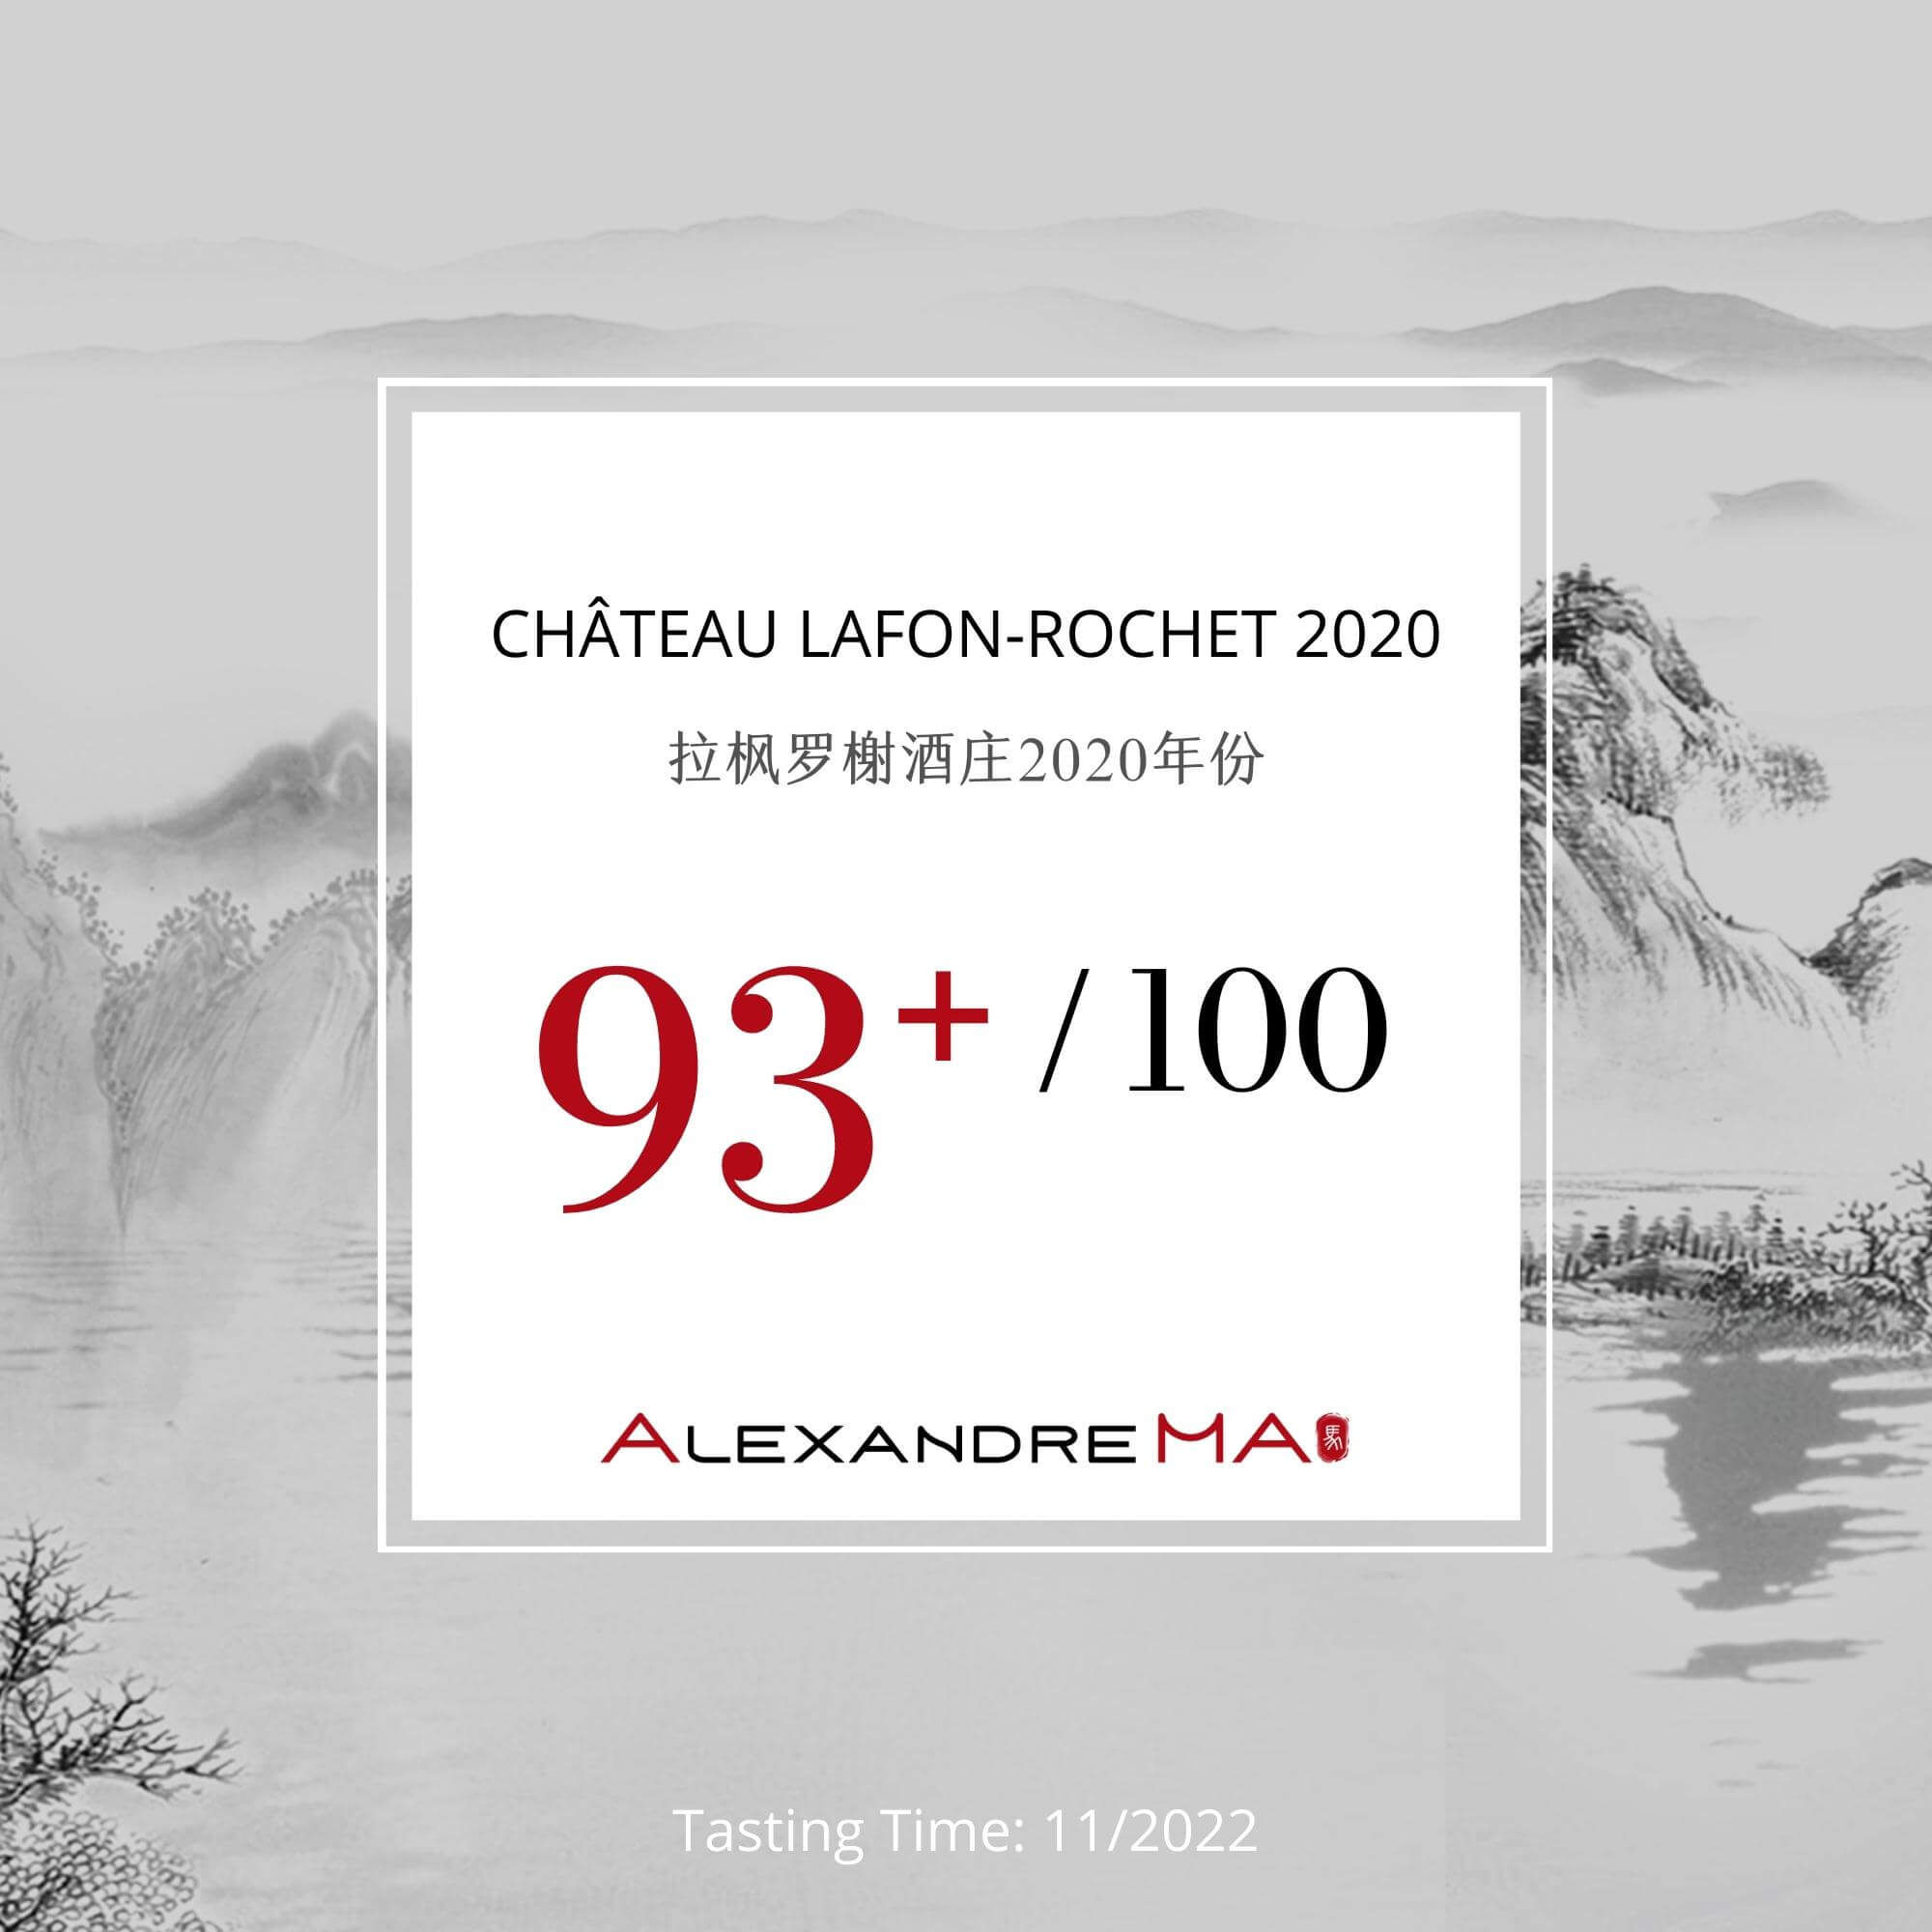 Château Lafon-Rochet 2020 - Alexandre MA